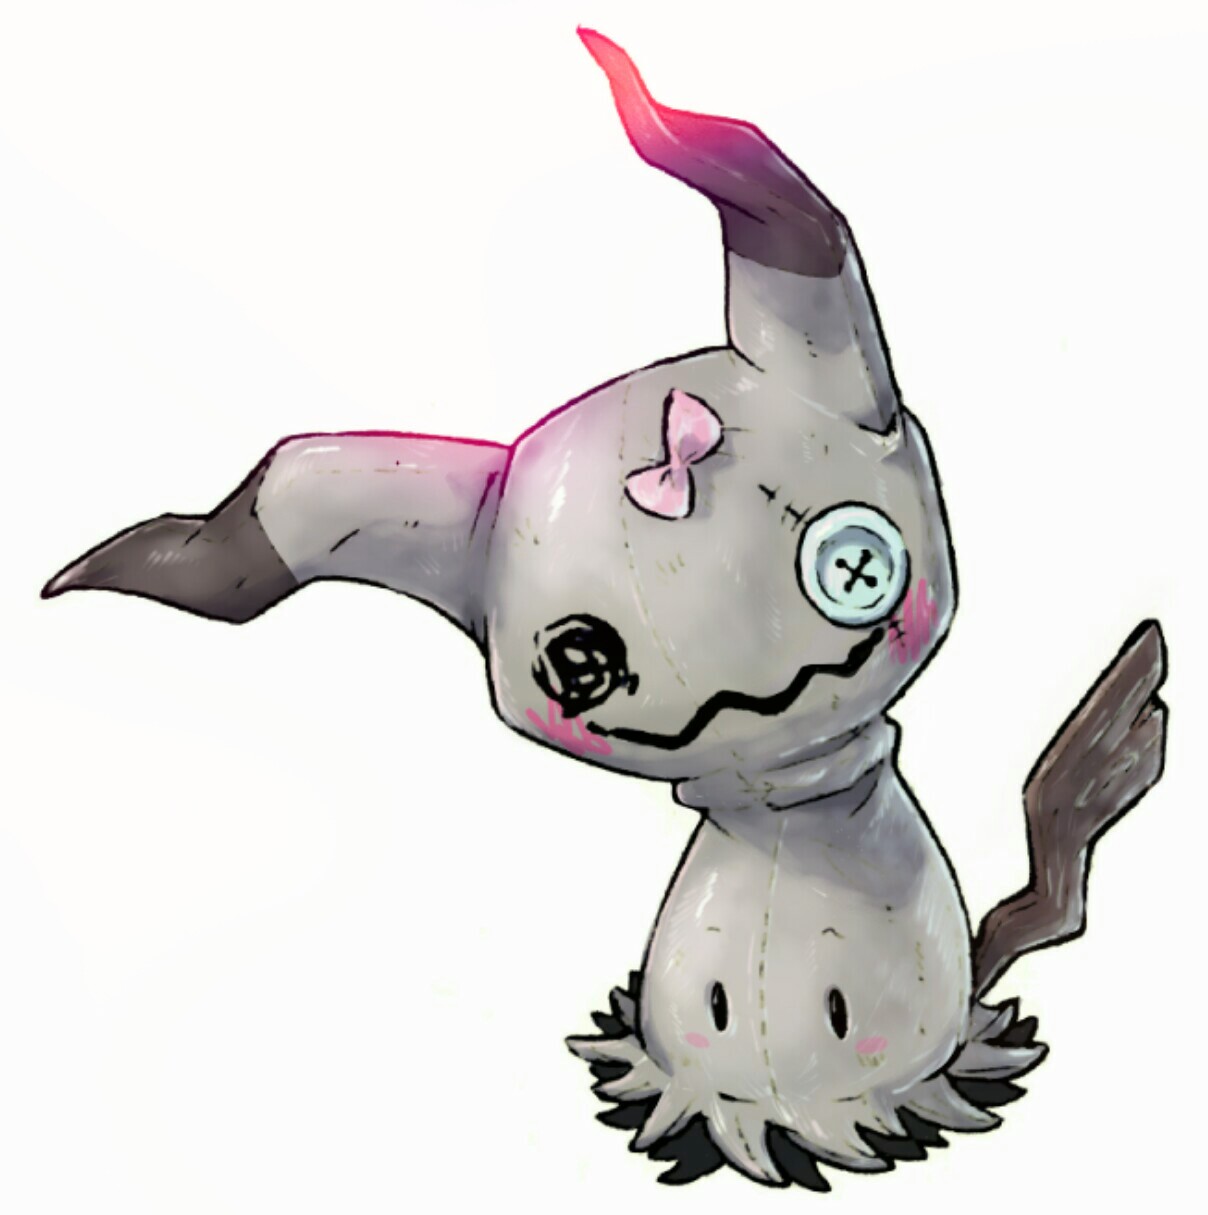 mimikyu (pokemon) drawn by etherealhaze